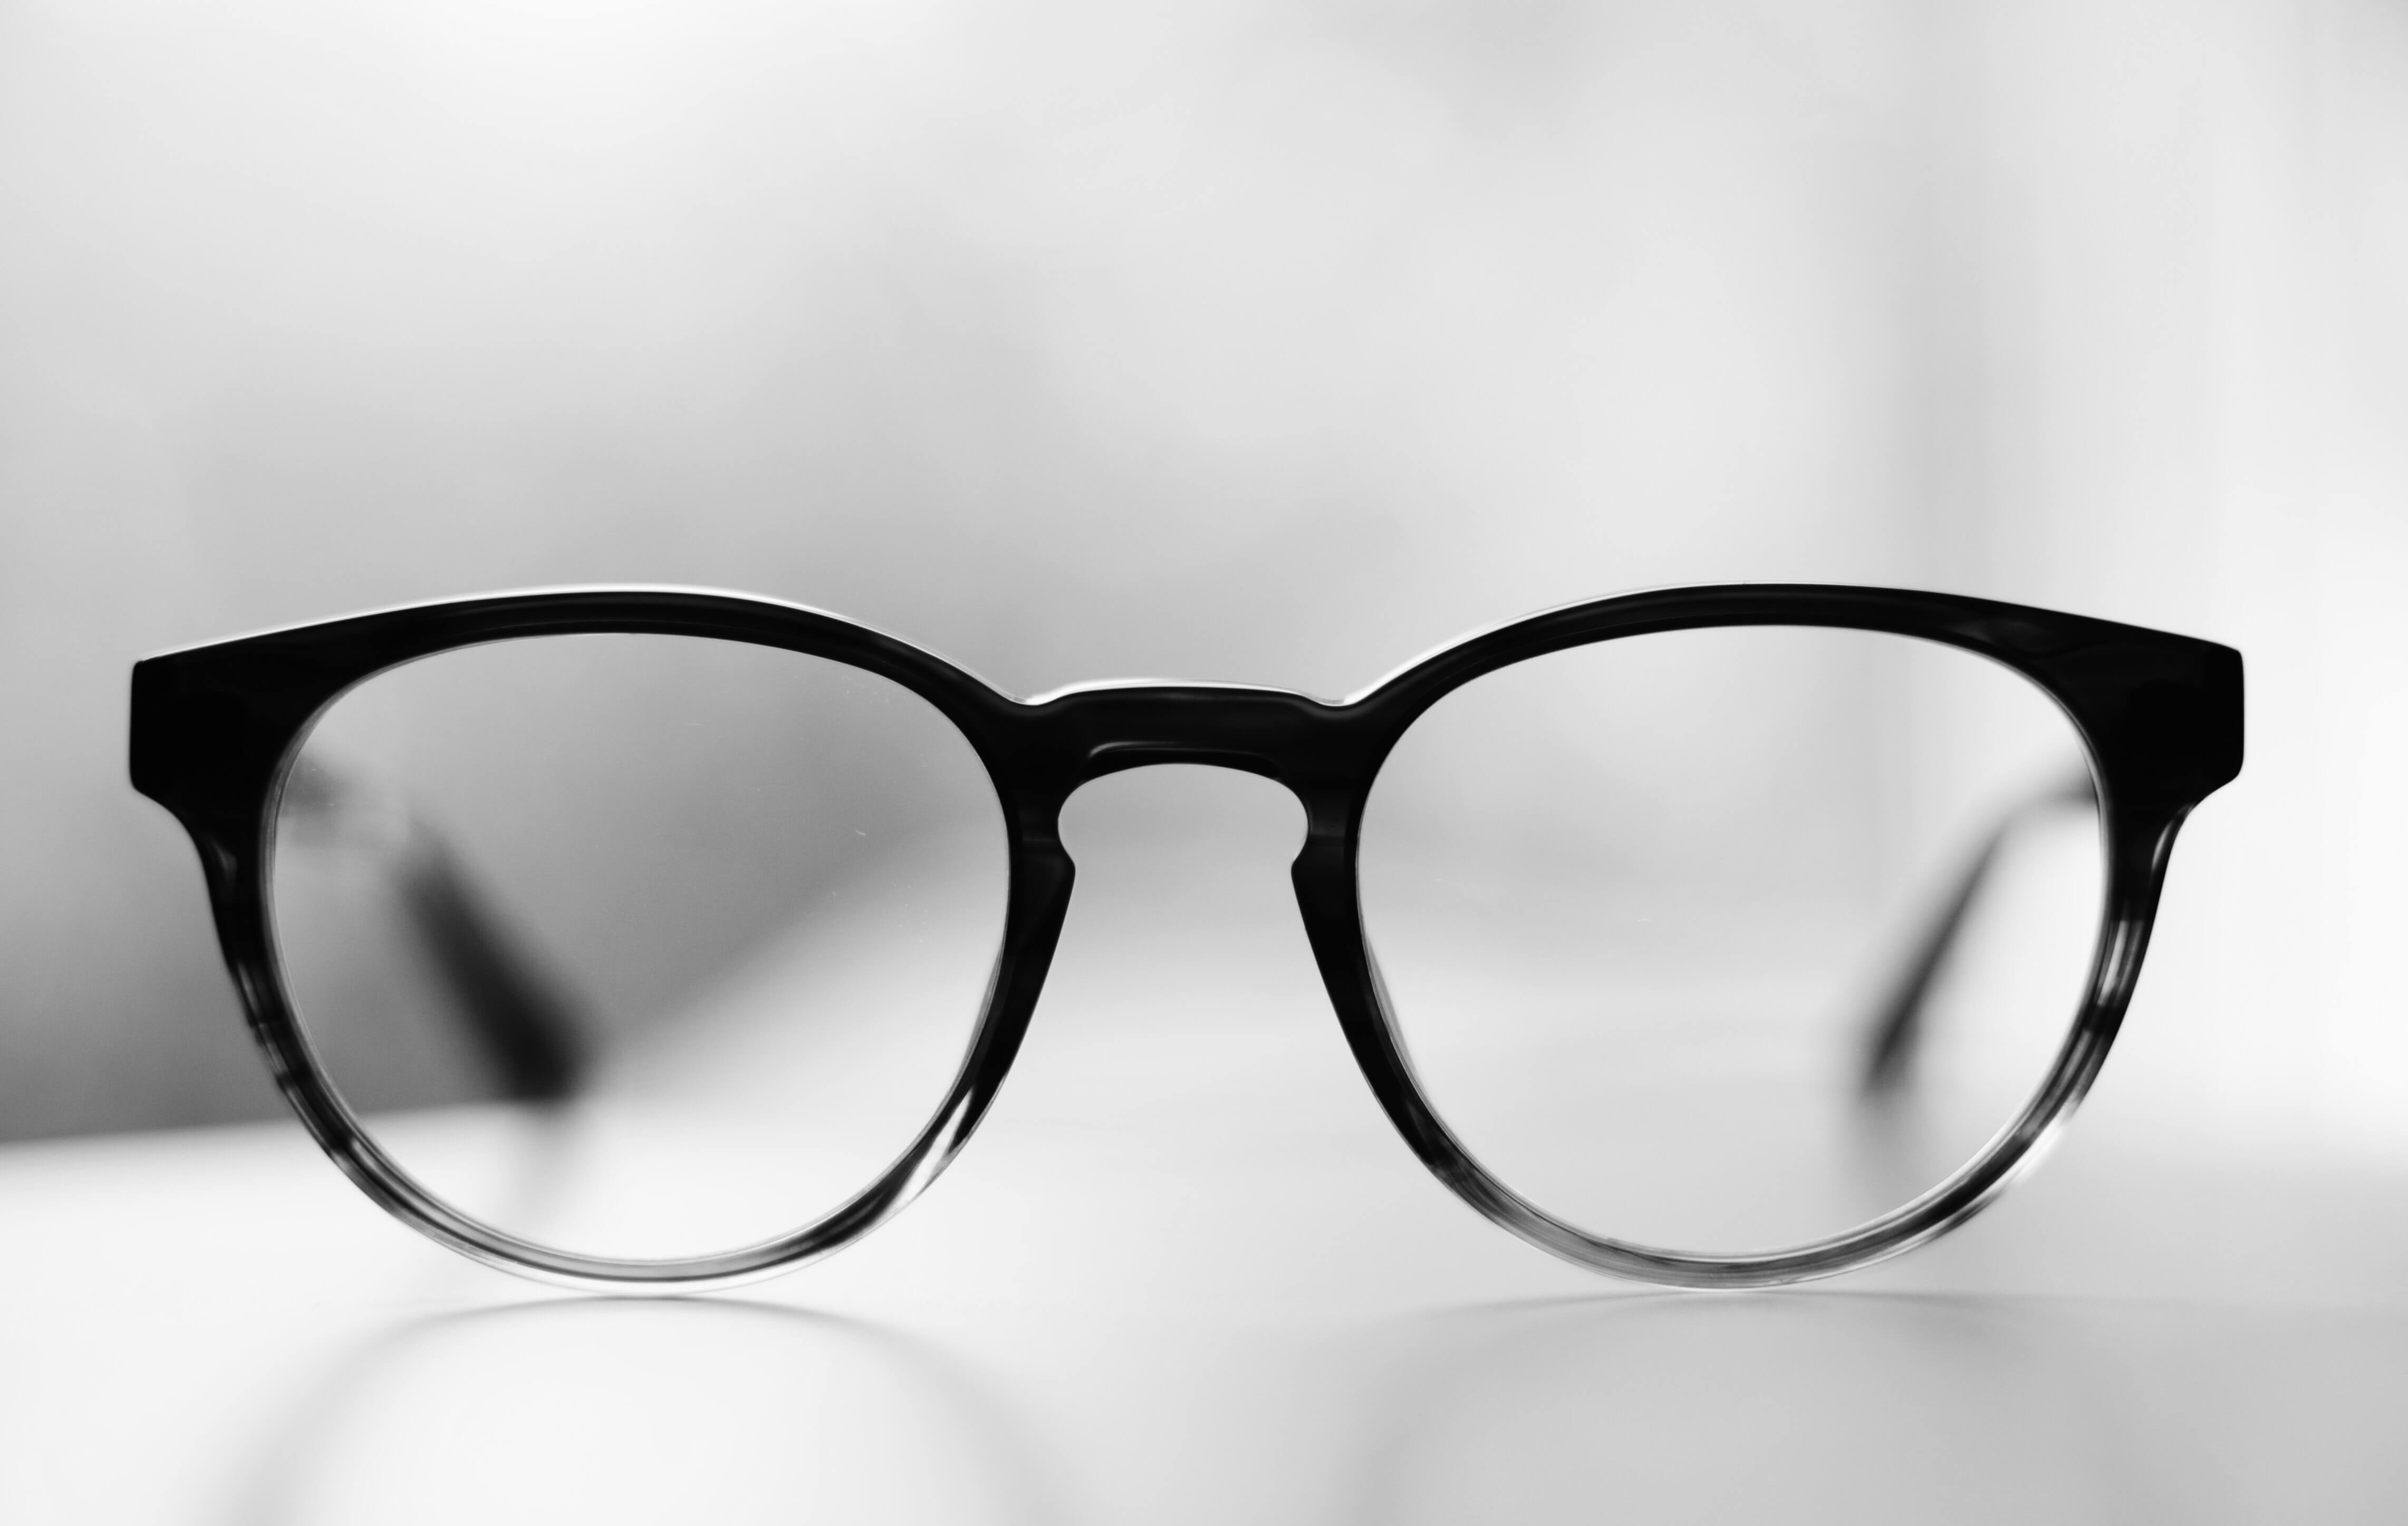 Black glasses representing an equity lens